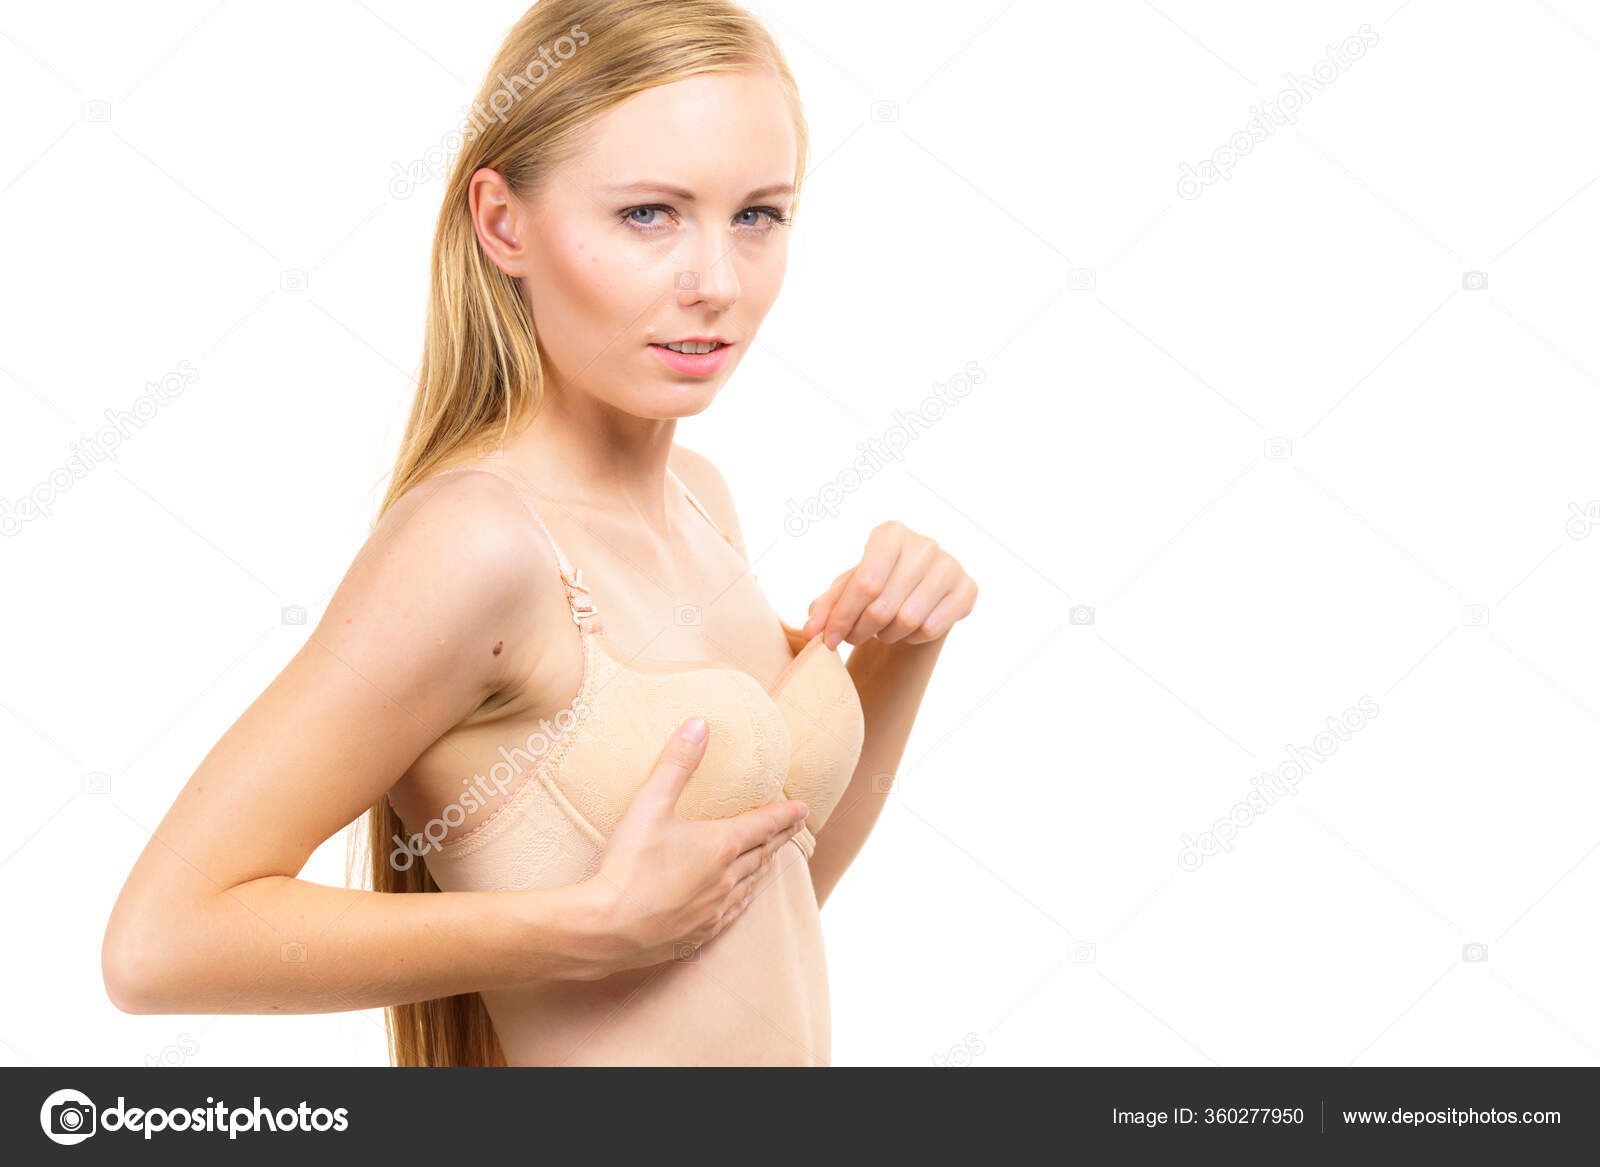 https://st3.depositphotos.com/1735158/36027/i/1600/depositphotos_360277950-stock-photo-slim-young-woman-small-breast.jpg